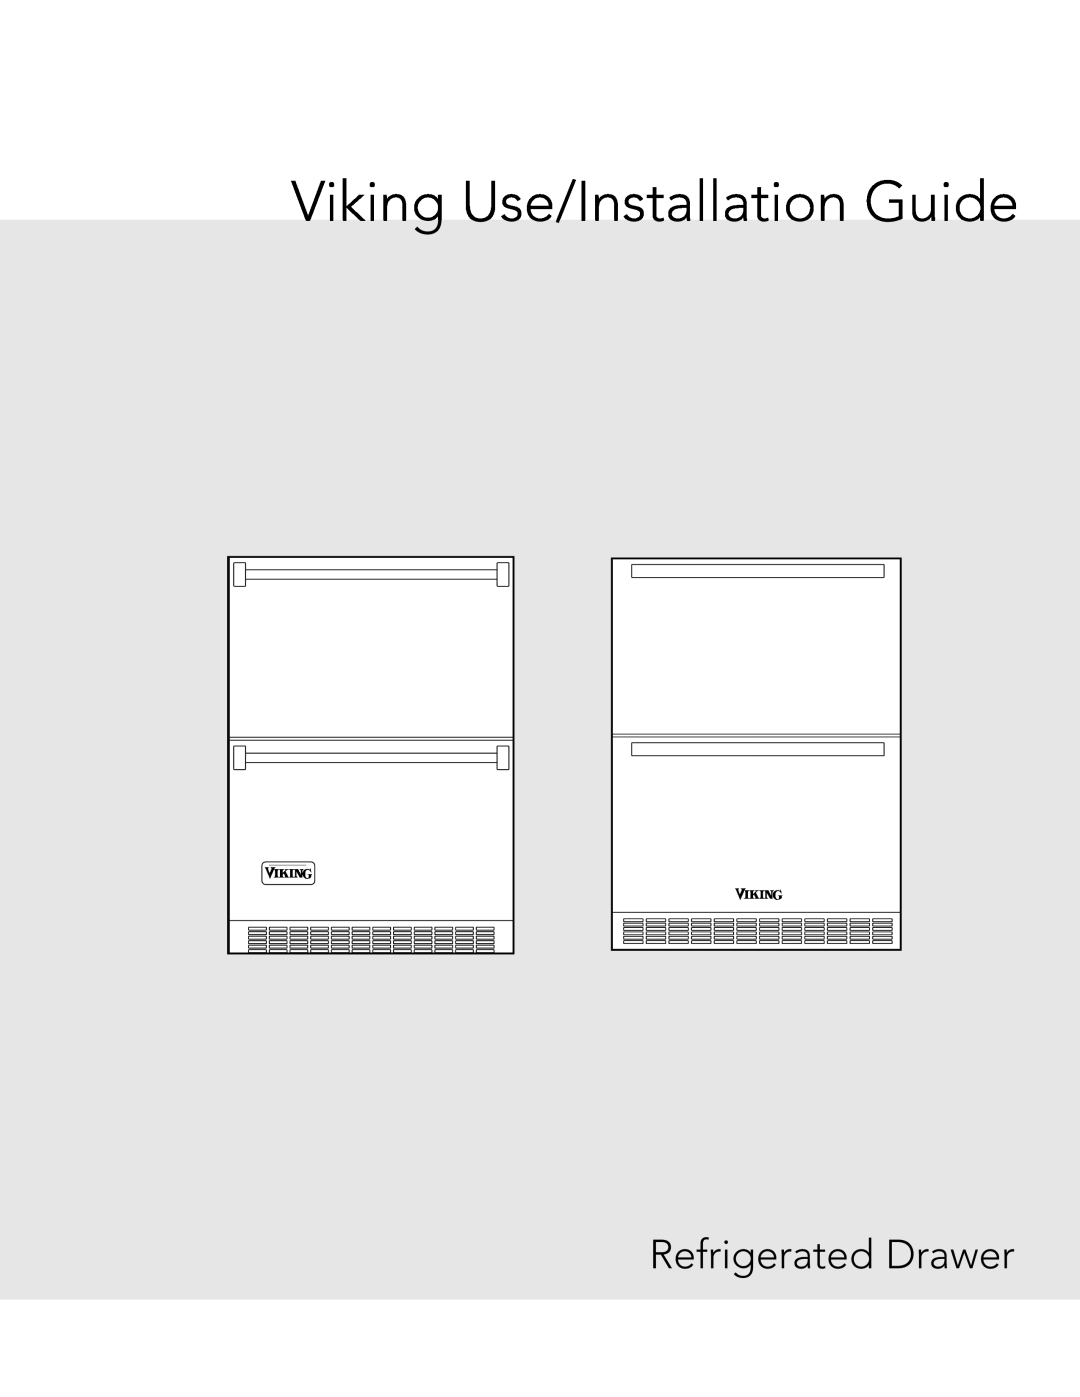 Viking Refrigerator Drawer manual Viking Use/Installation Guide, Refrigerated Drawer 